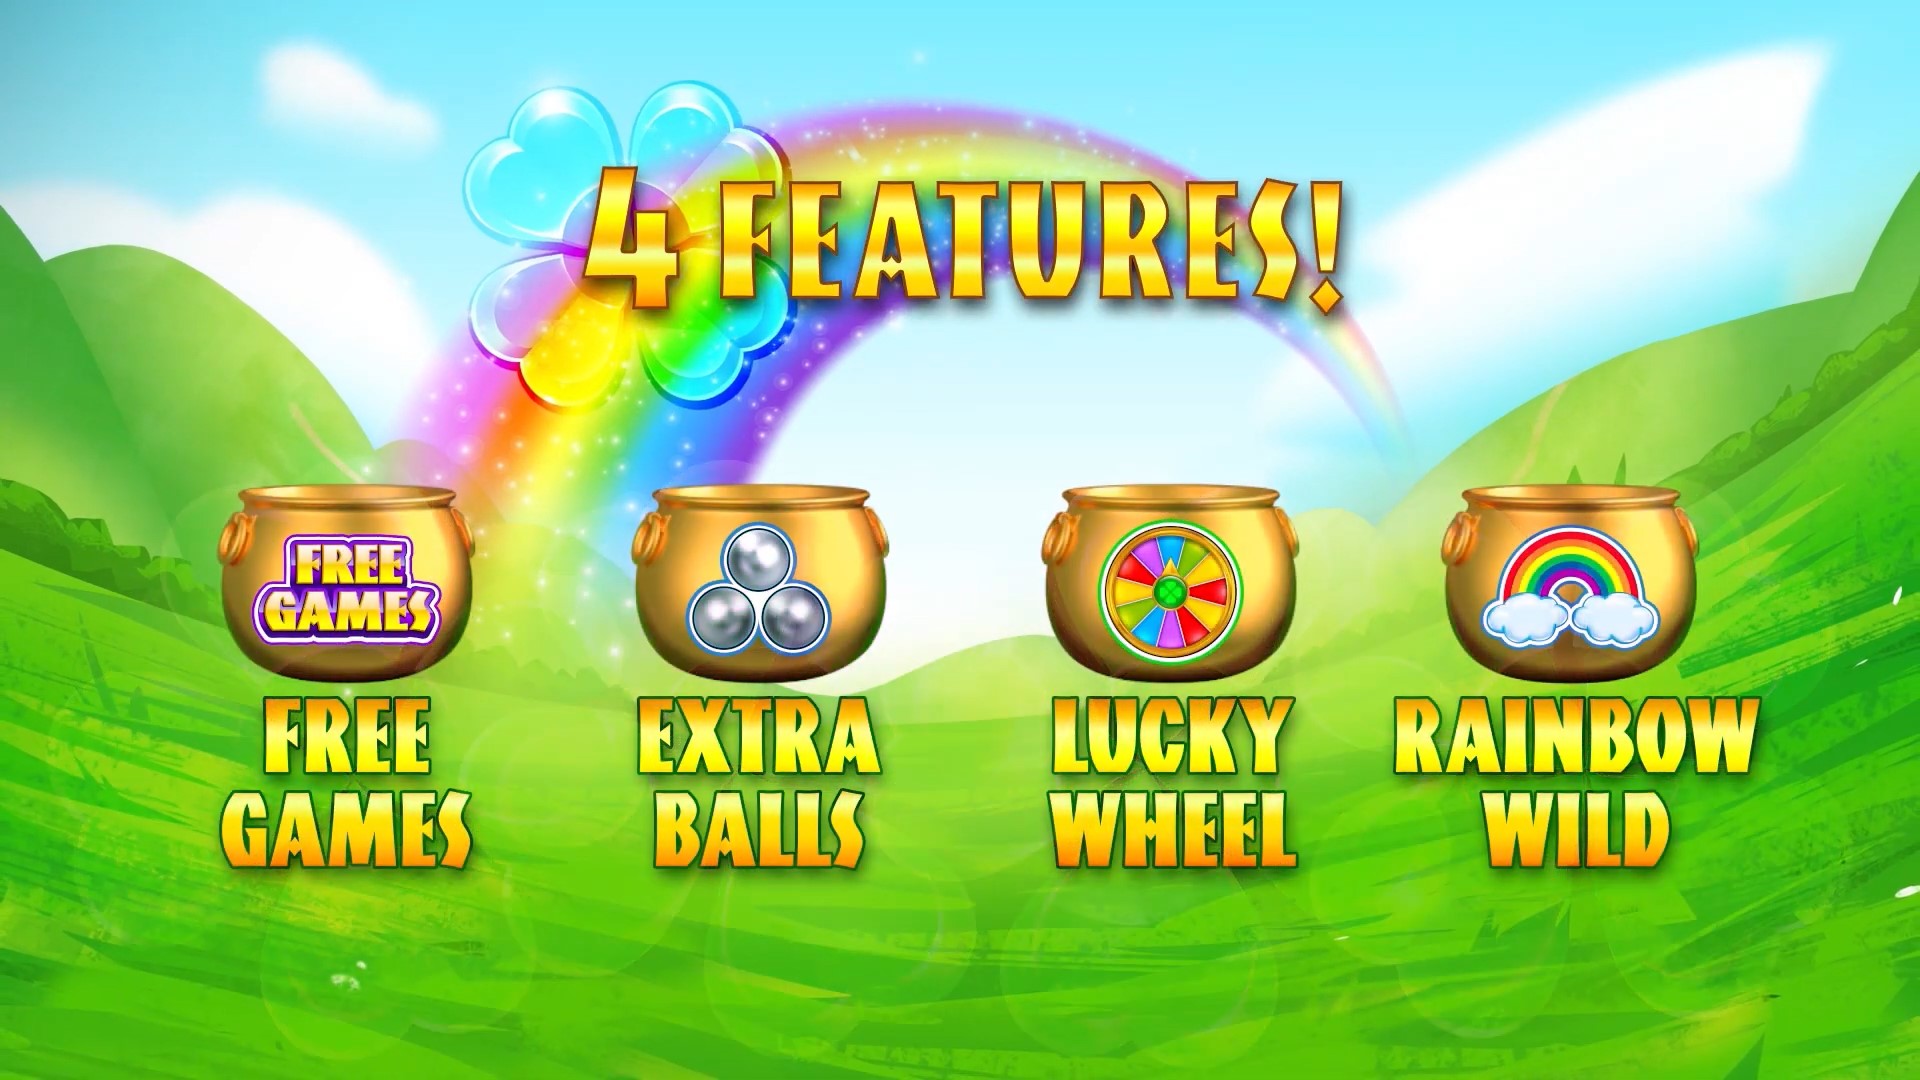 Rain Balls four features Skywind